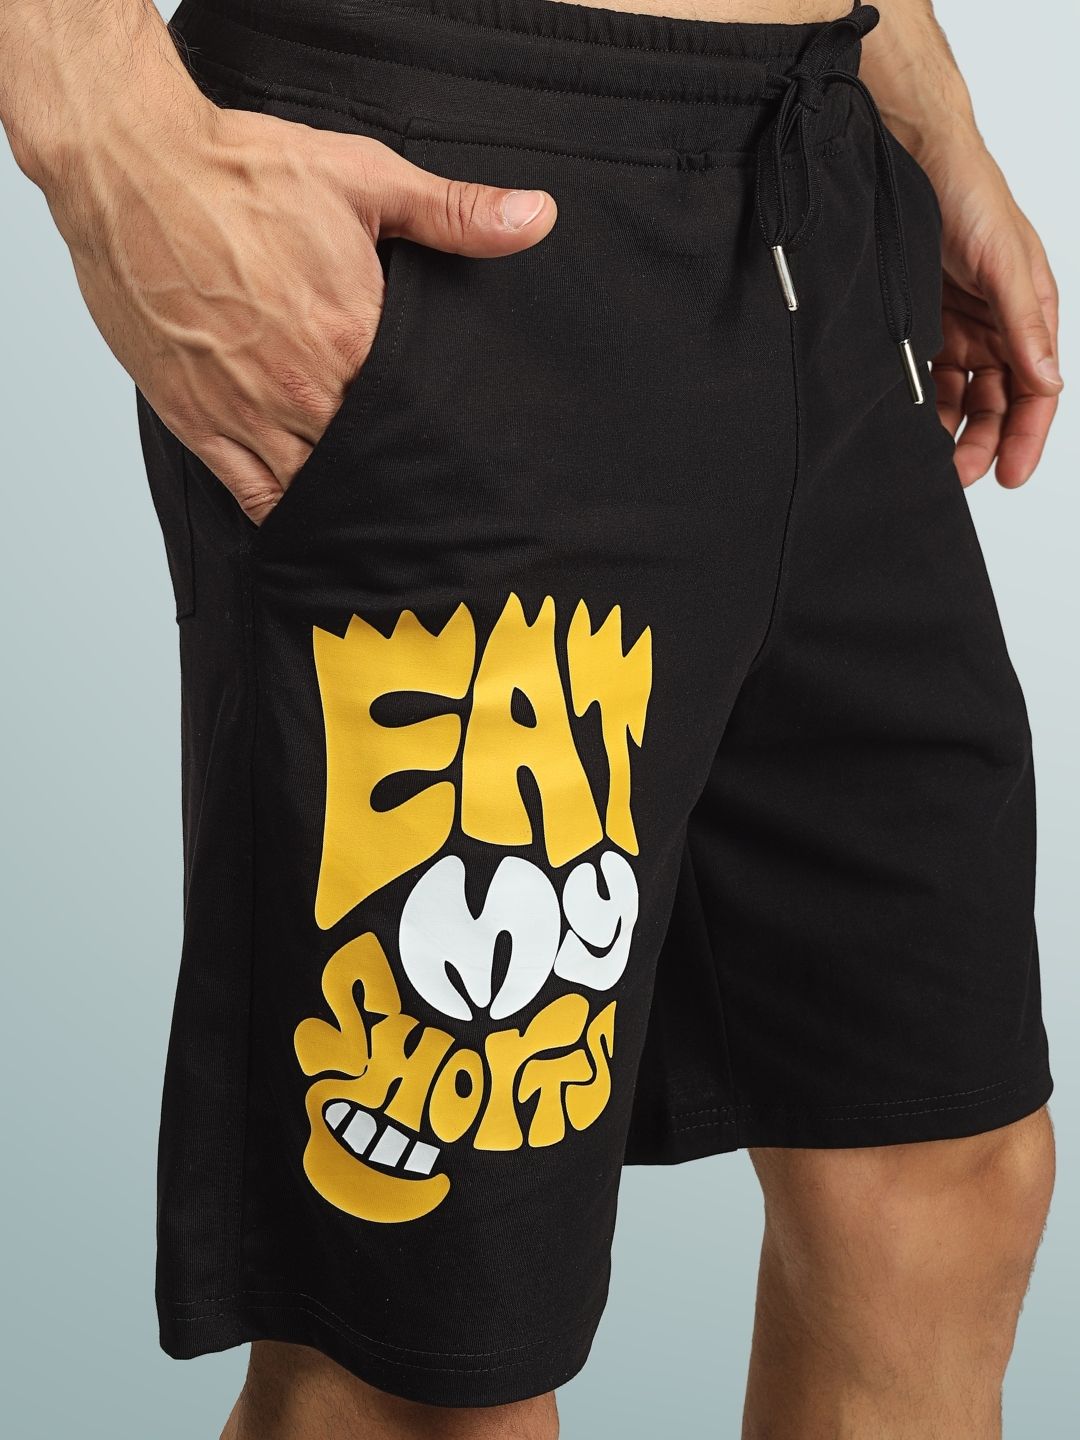 Eat My Shorts Regular Fit Shorts (Black) - Wearduds